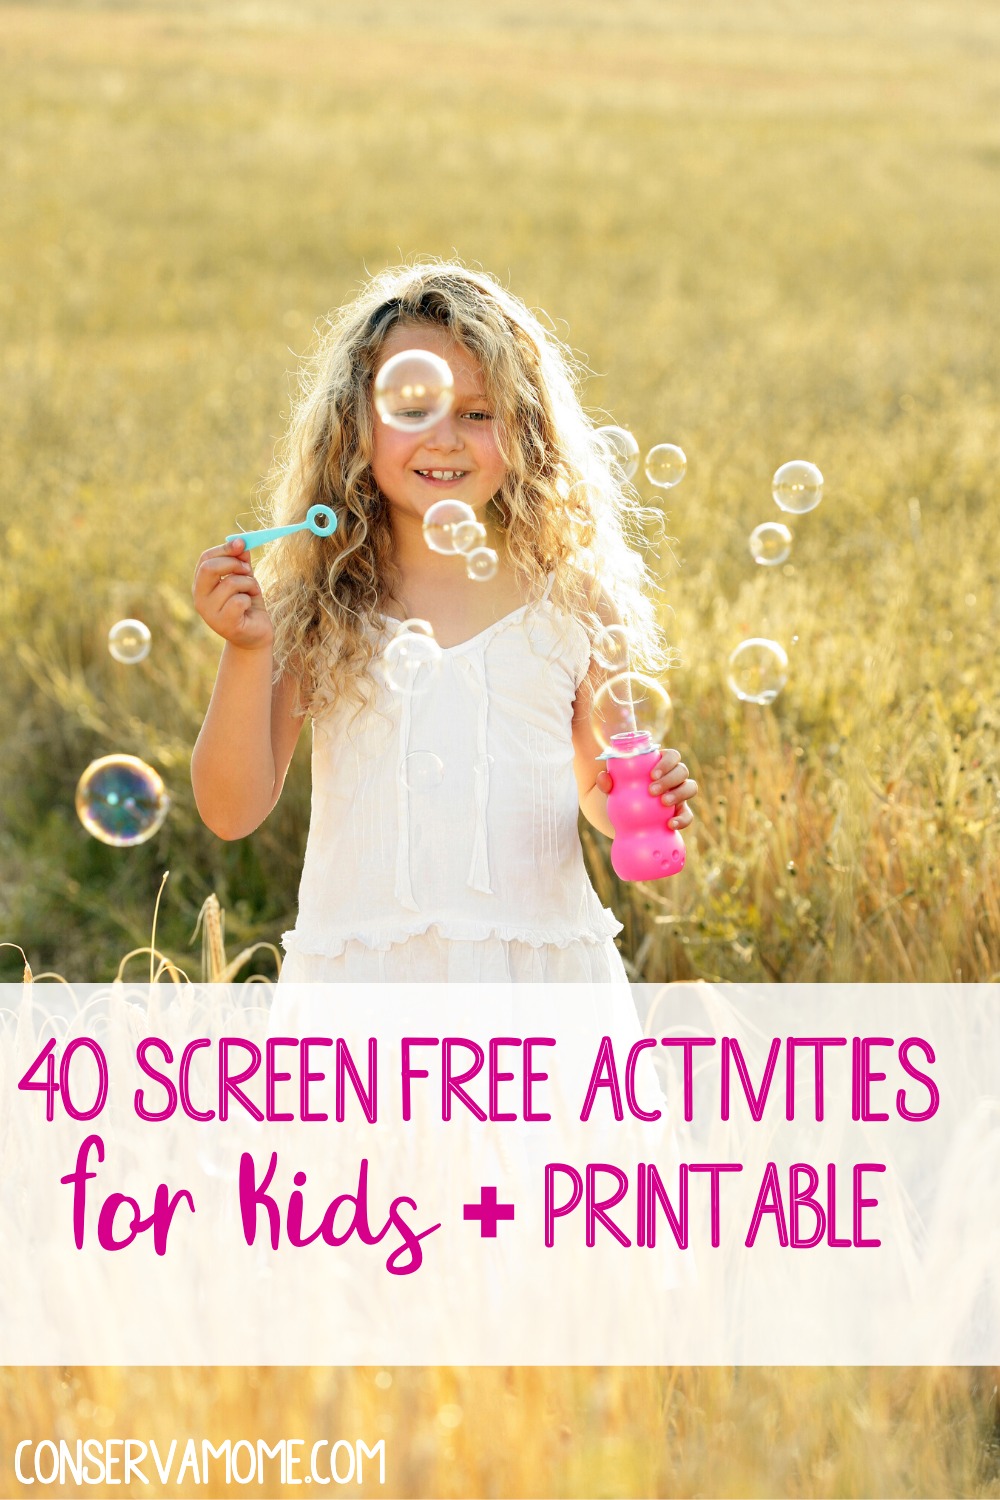 40 Screen Free Activities for kids